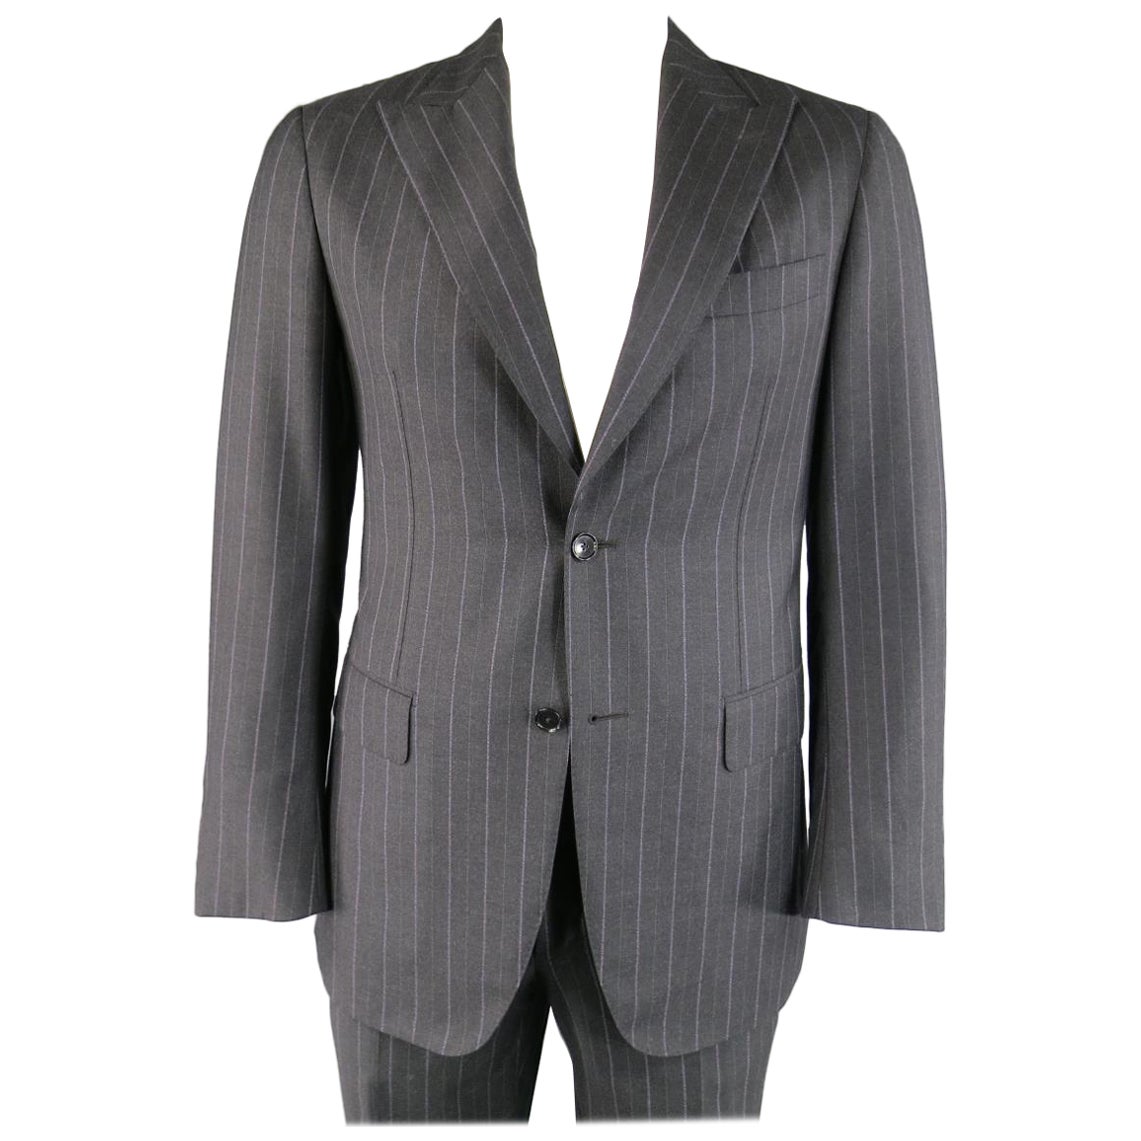 PAL ZILERI 40 Regular Charcoal & Lavender Striped Wool/Cashmere Peak Lapel Suit For Sale